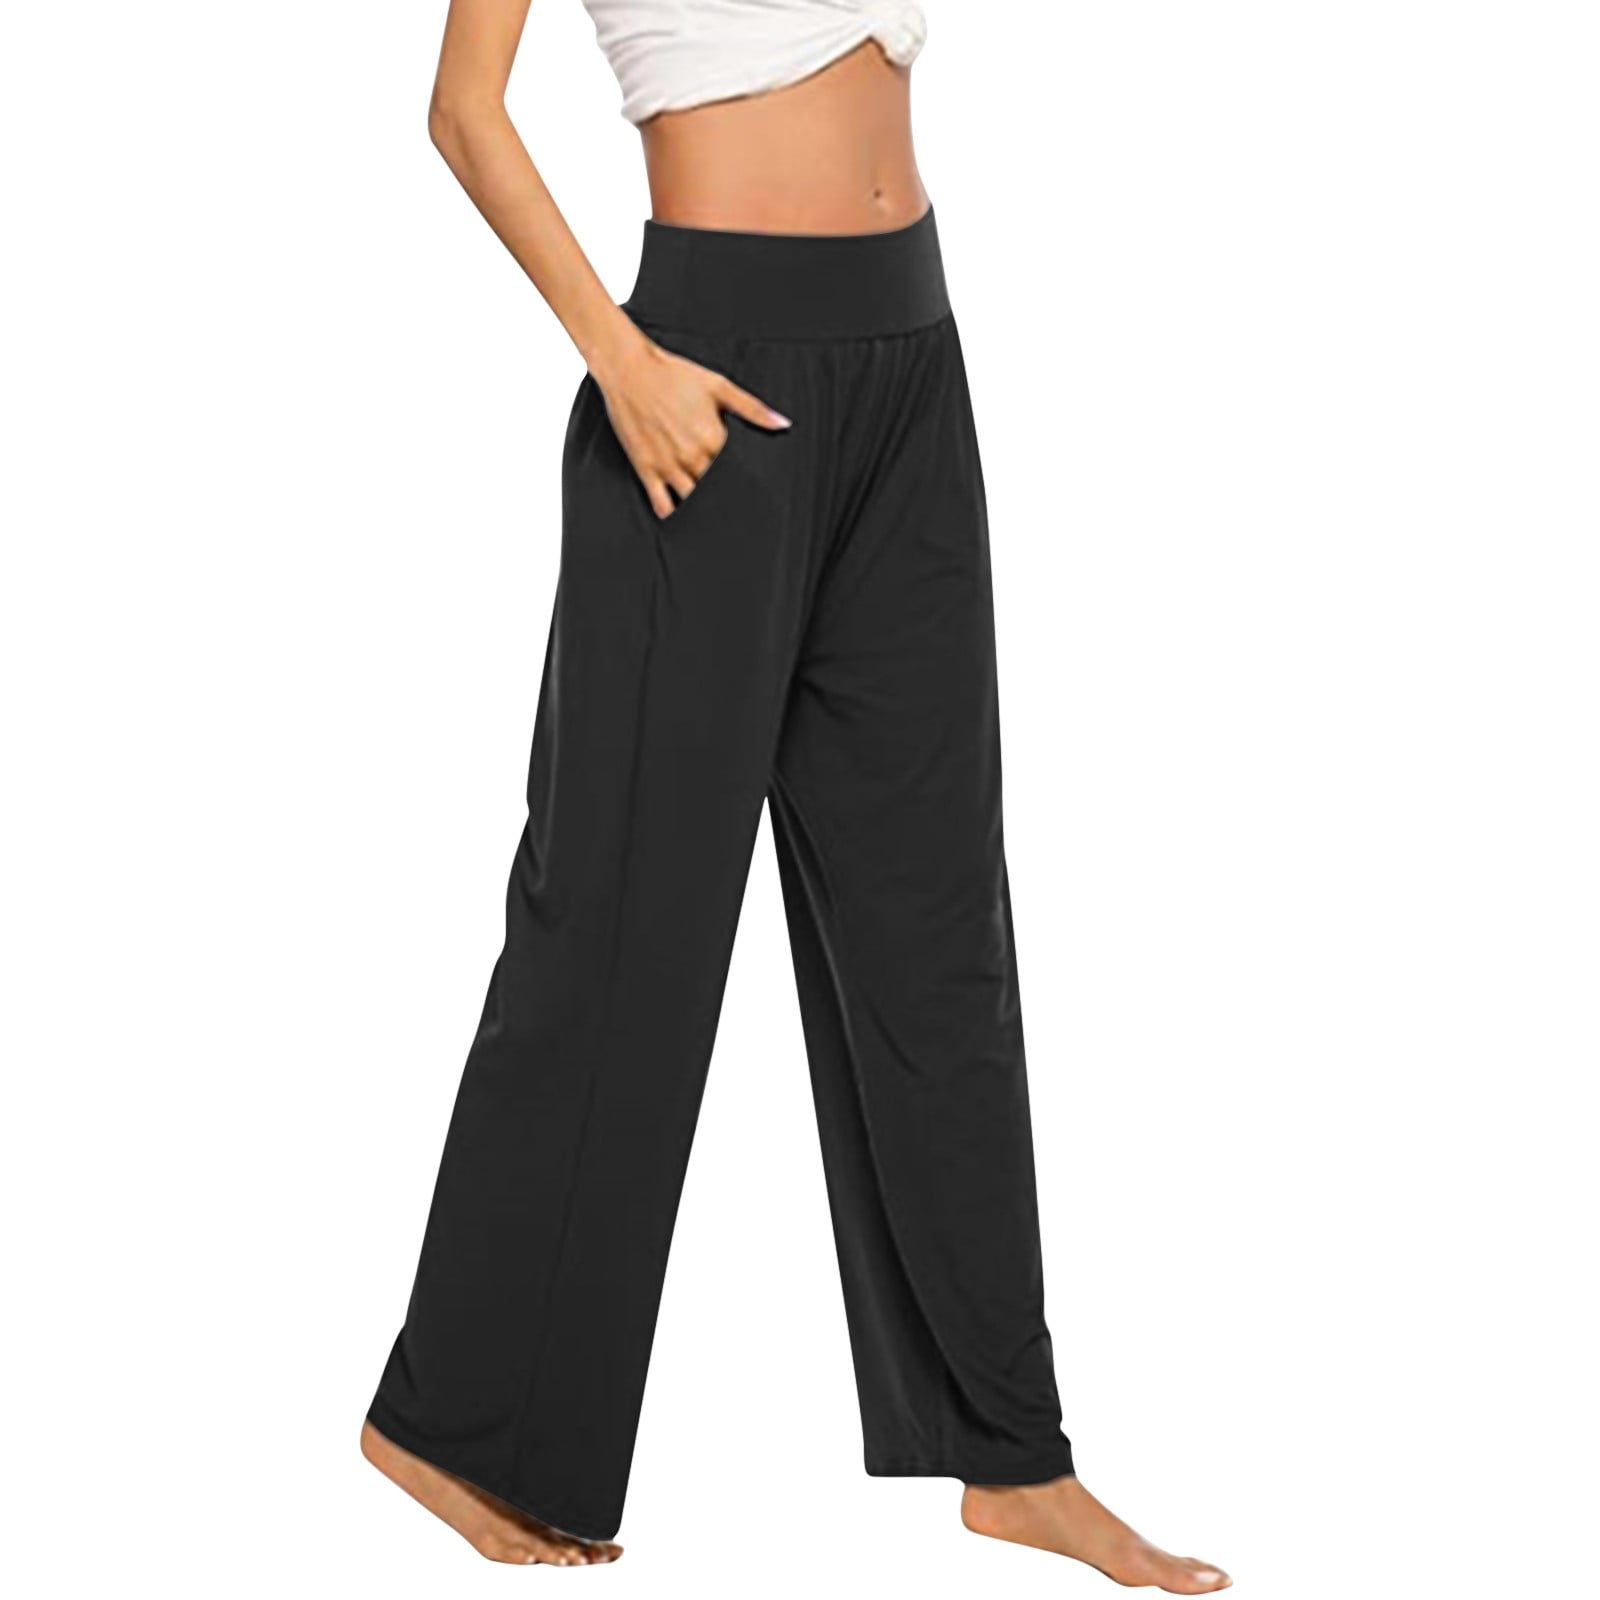  Promover Petite Wide Leg Black Pants For Women Stretchy Yoga  Pants